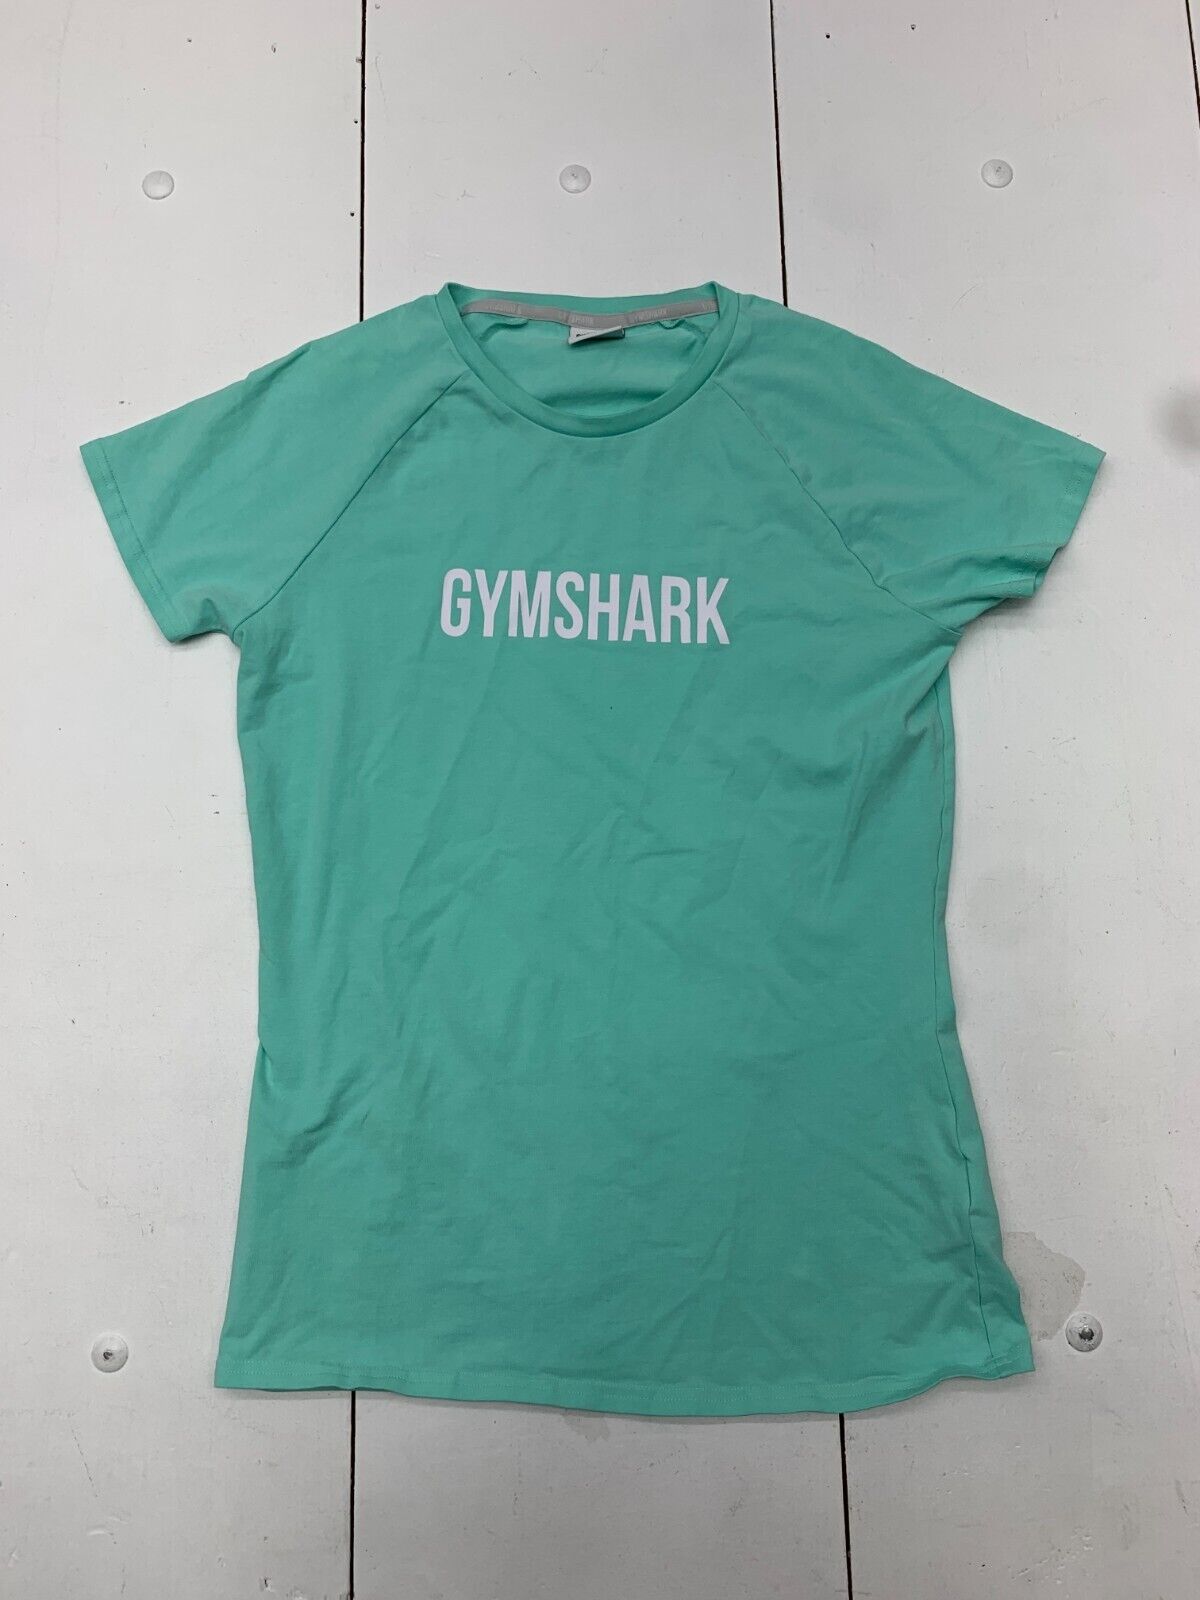 Gymshark Mens Mint Athletic Short Sleeve Shirt Size Medium - beyond exchange